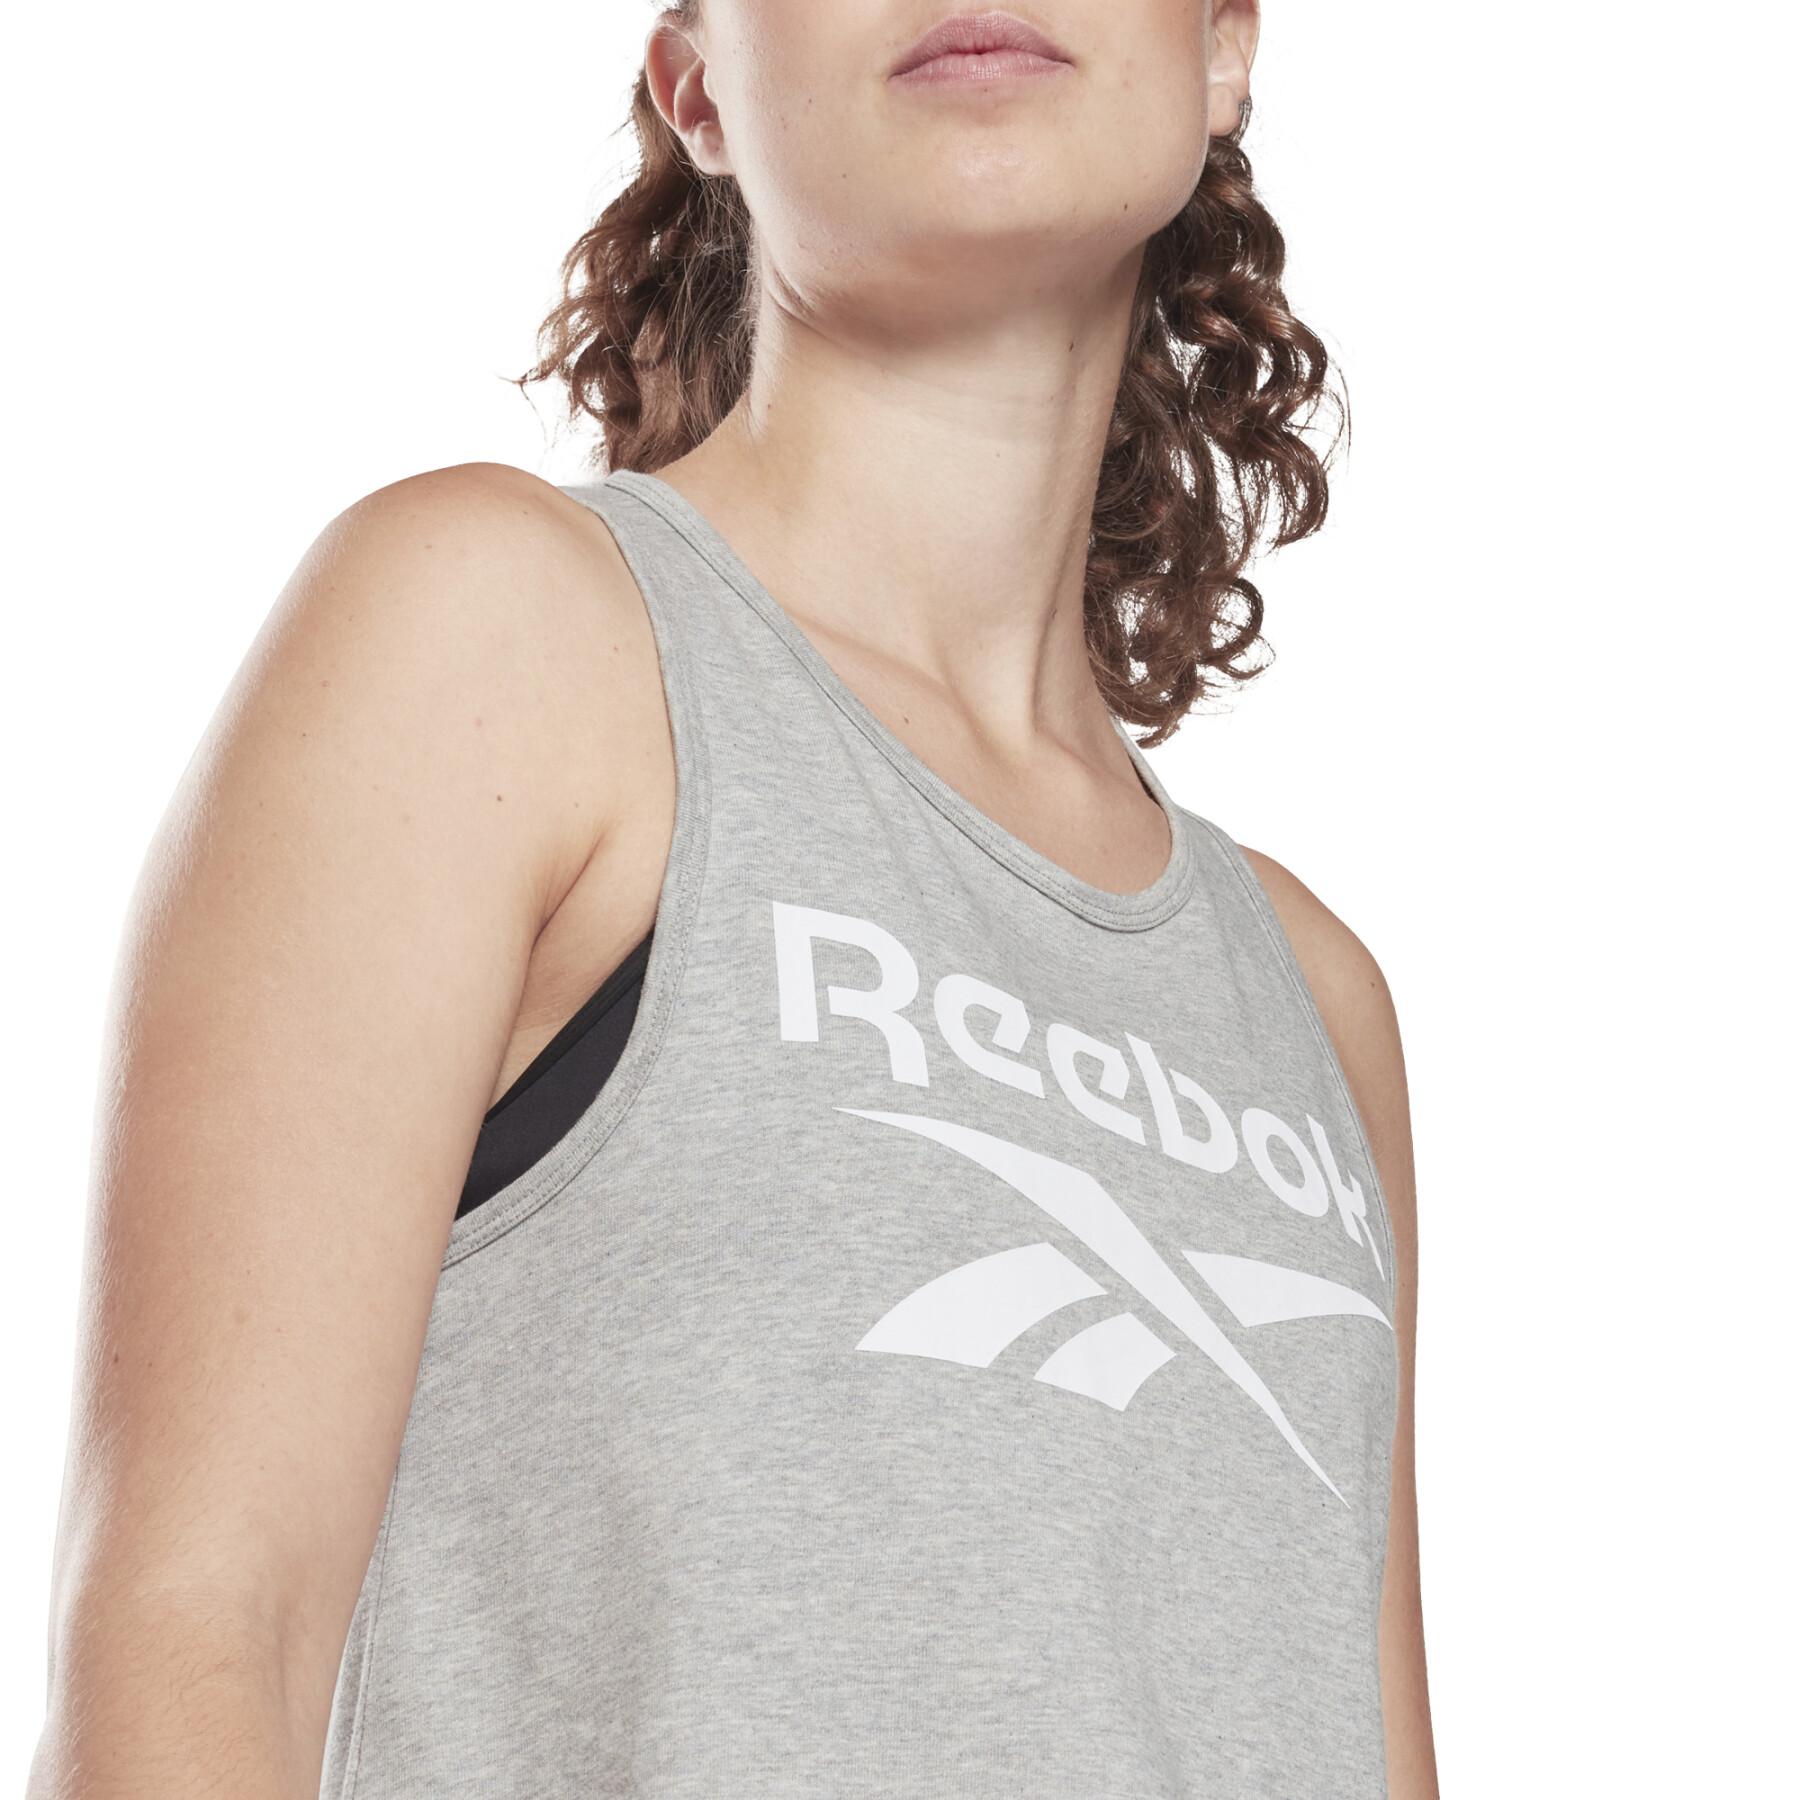 Camiseta de tirantes para mujer Reebok Identity Bl